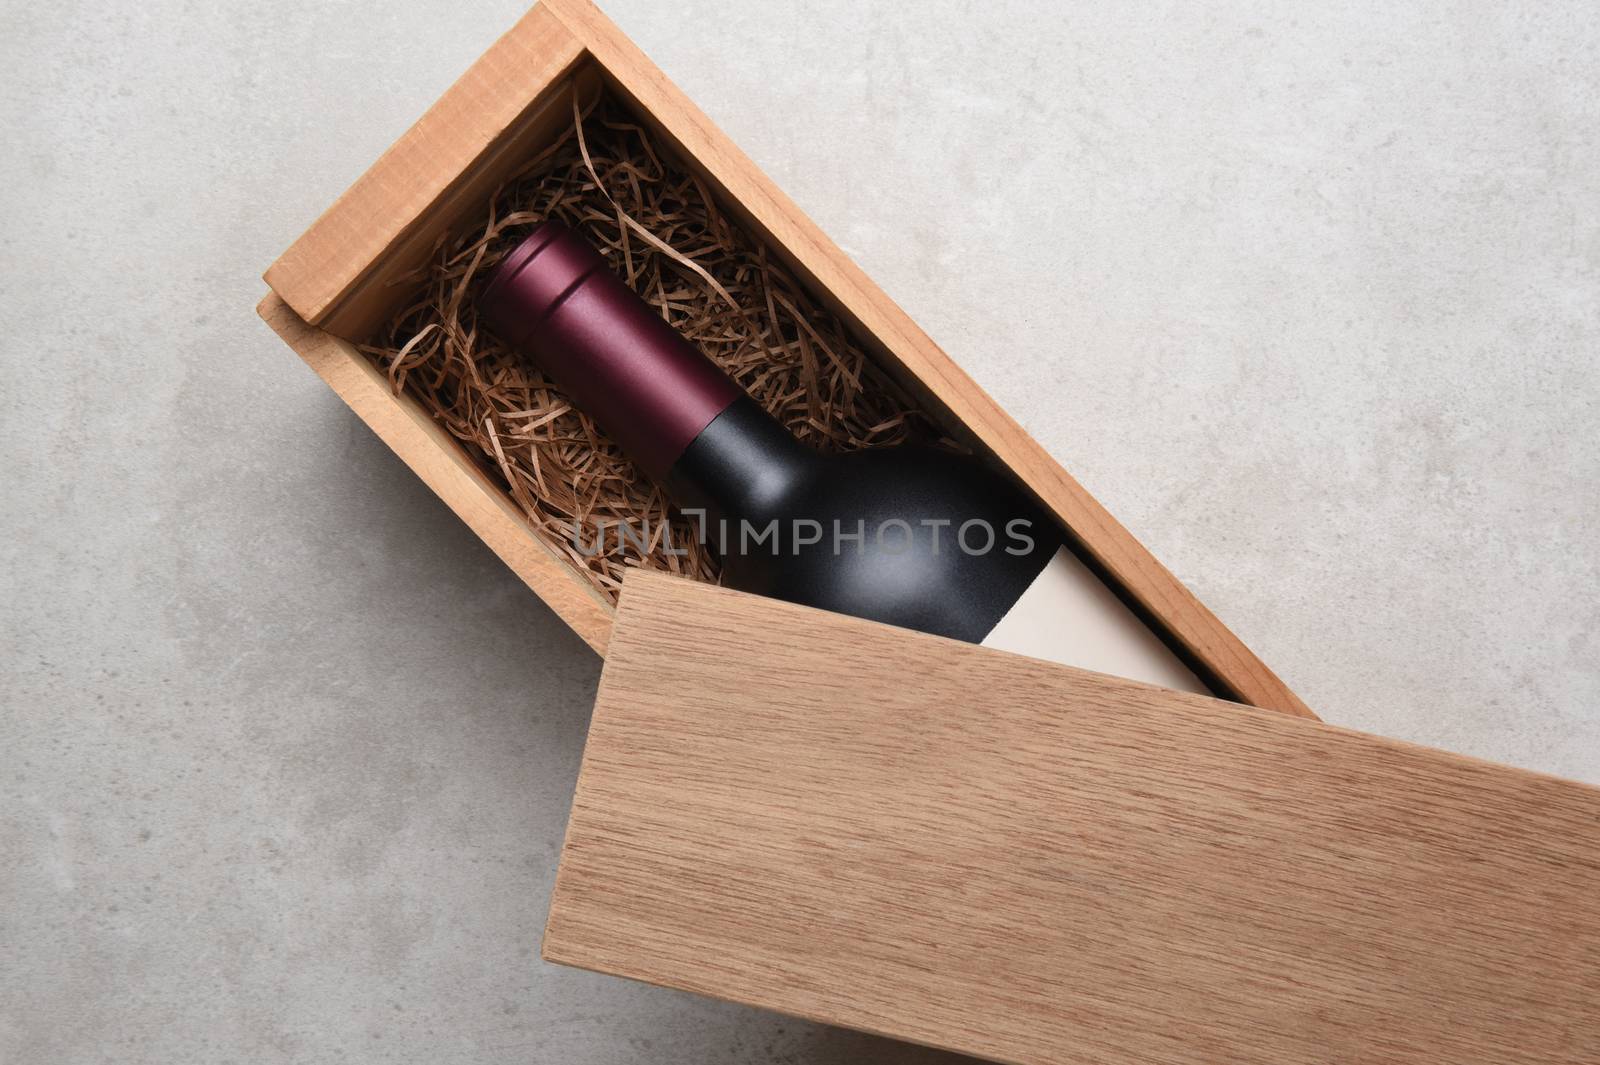 A single bottle of red wine in a wood box by sCukrov